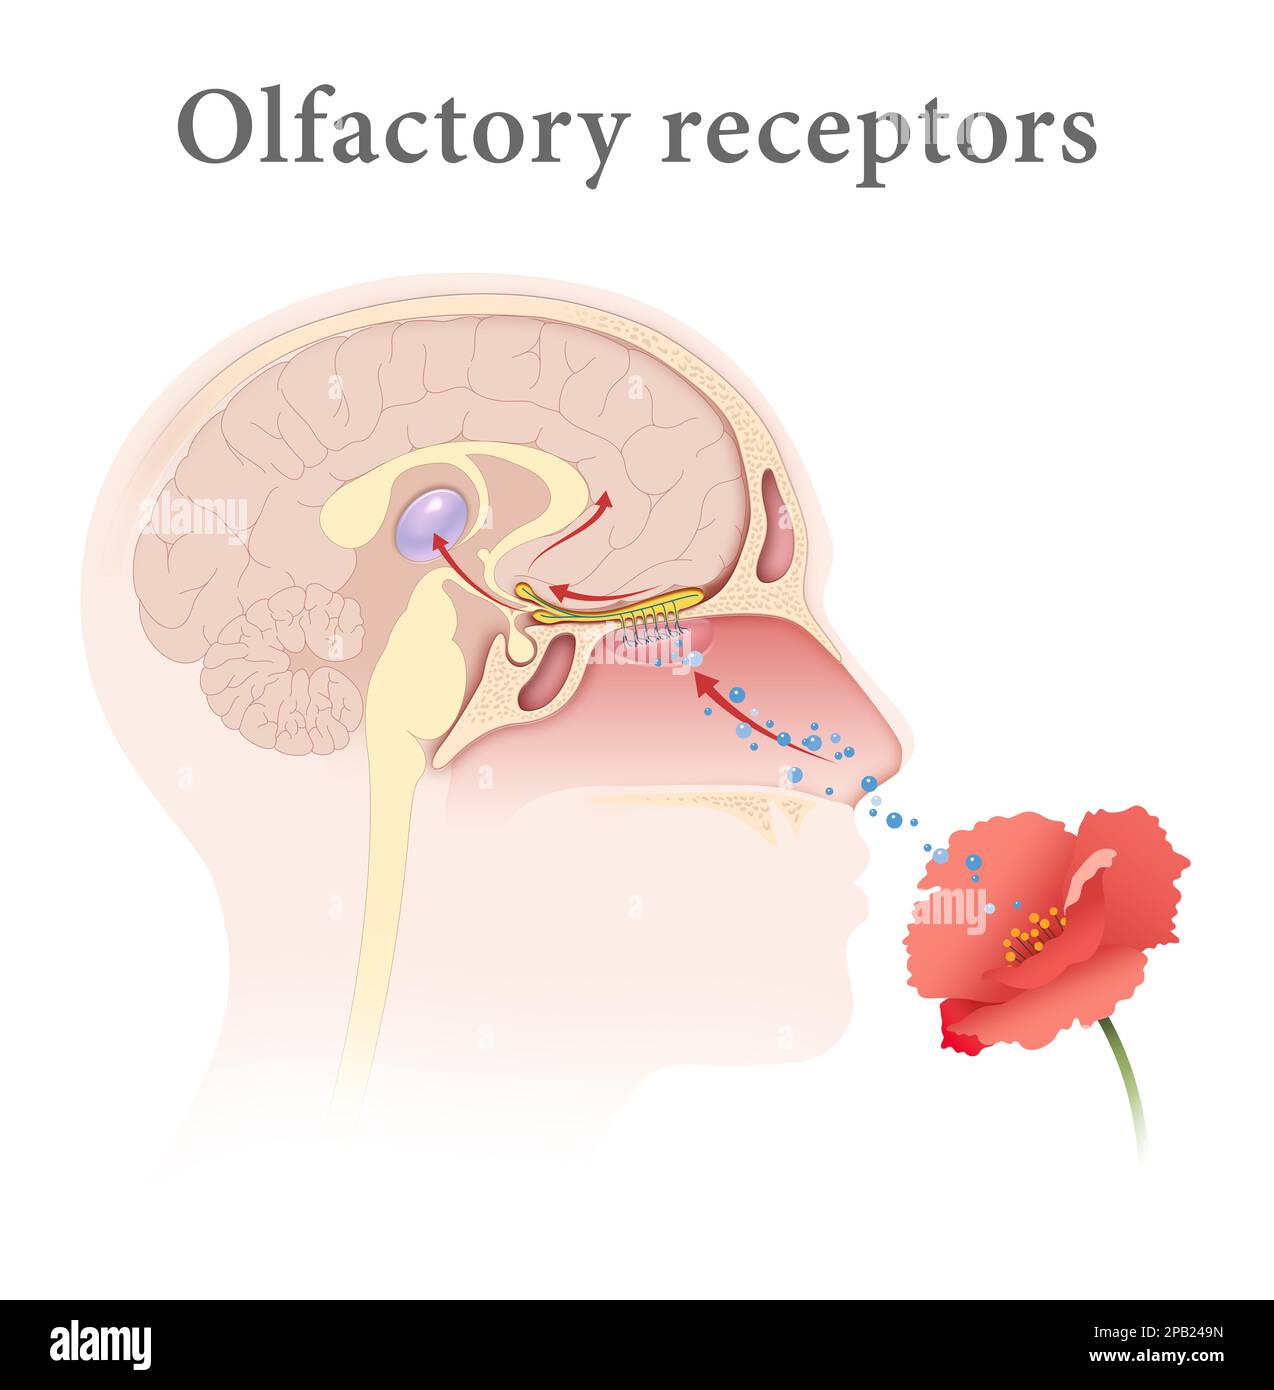 Human Olfactory Receptors and Pathway Stock Photo